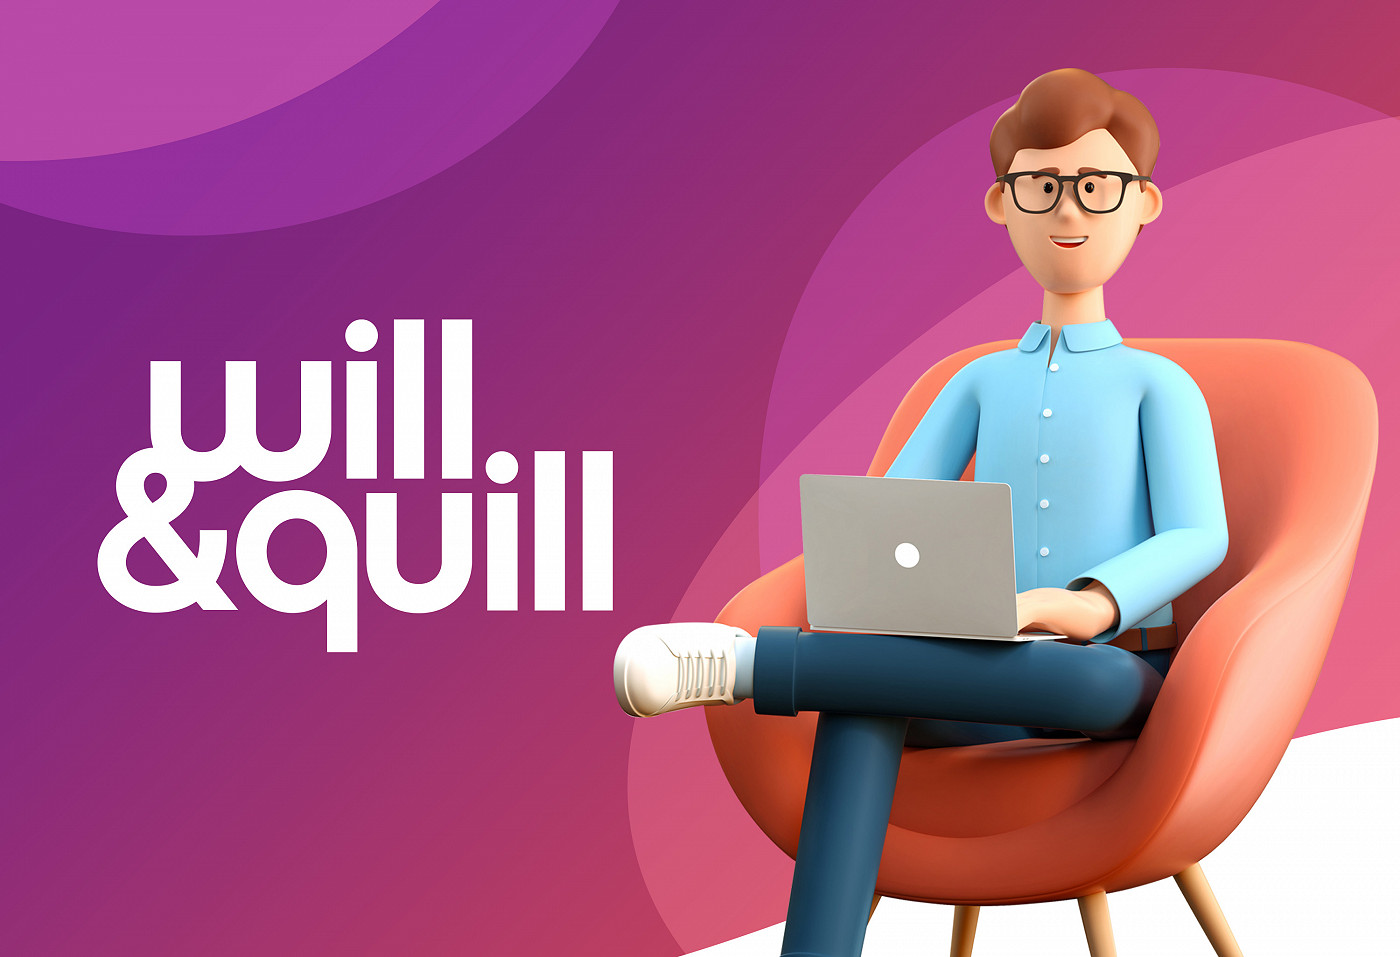 Will & Quill Website Design